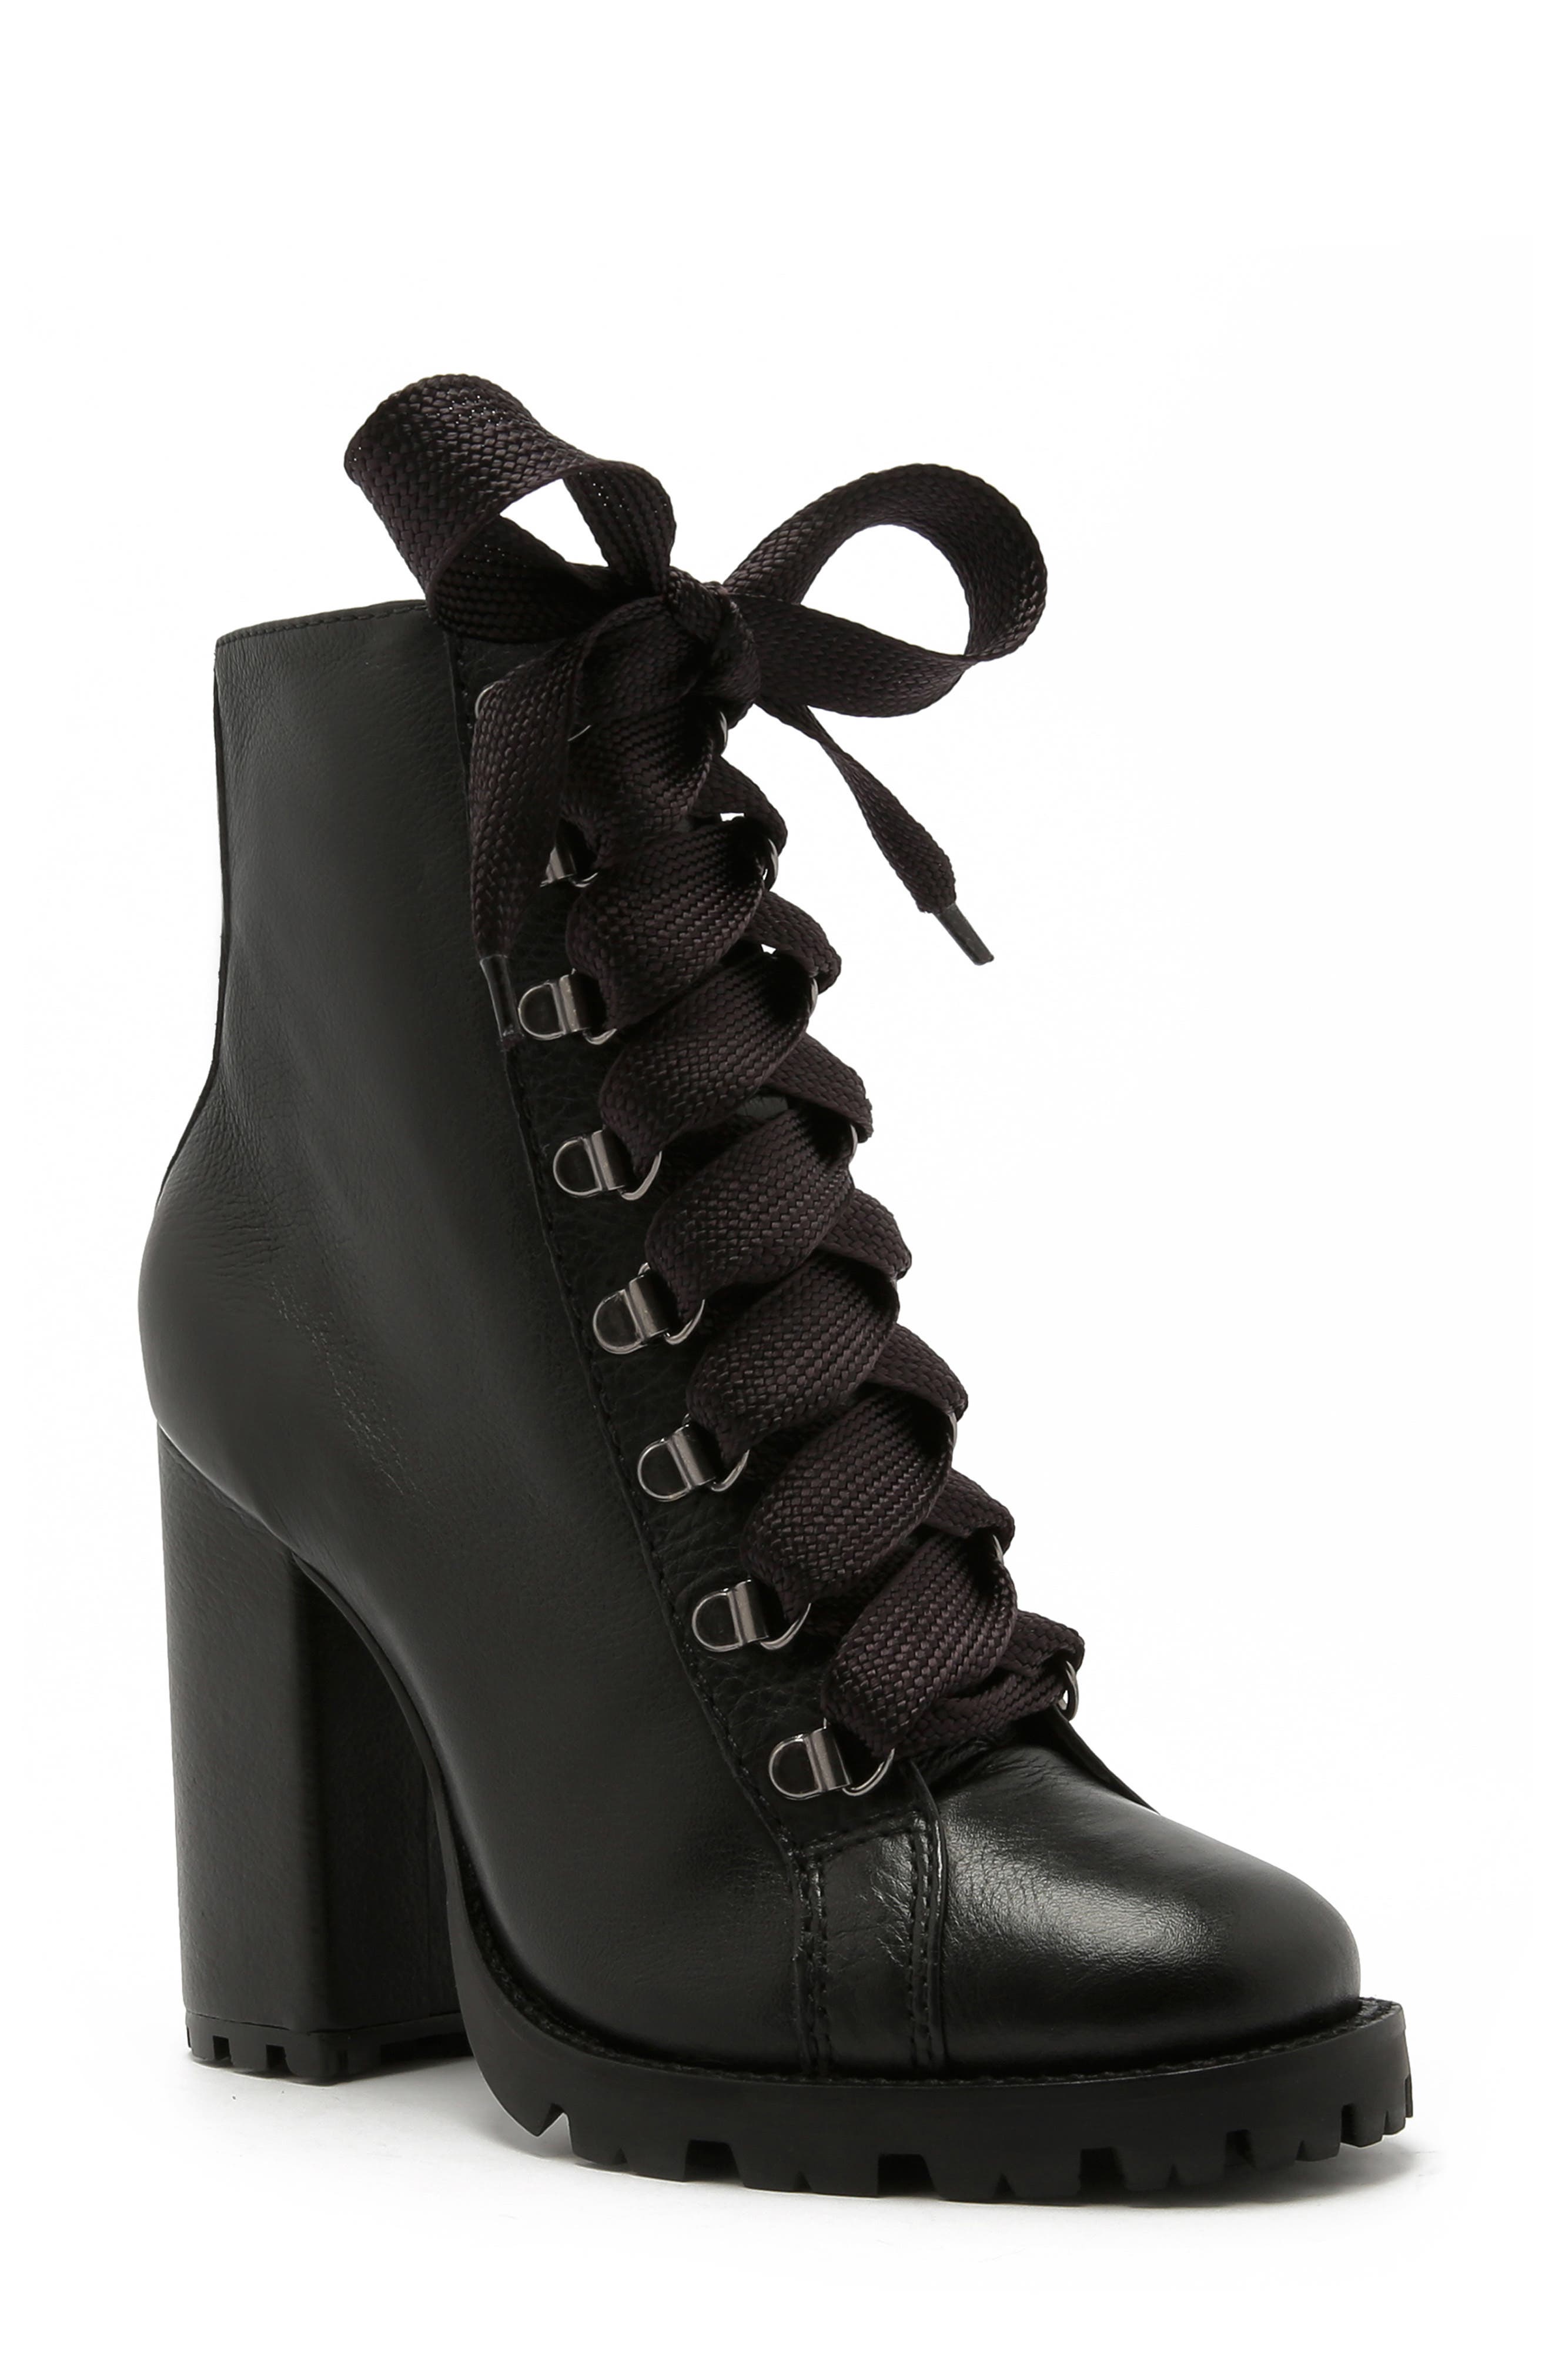 nice black boots